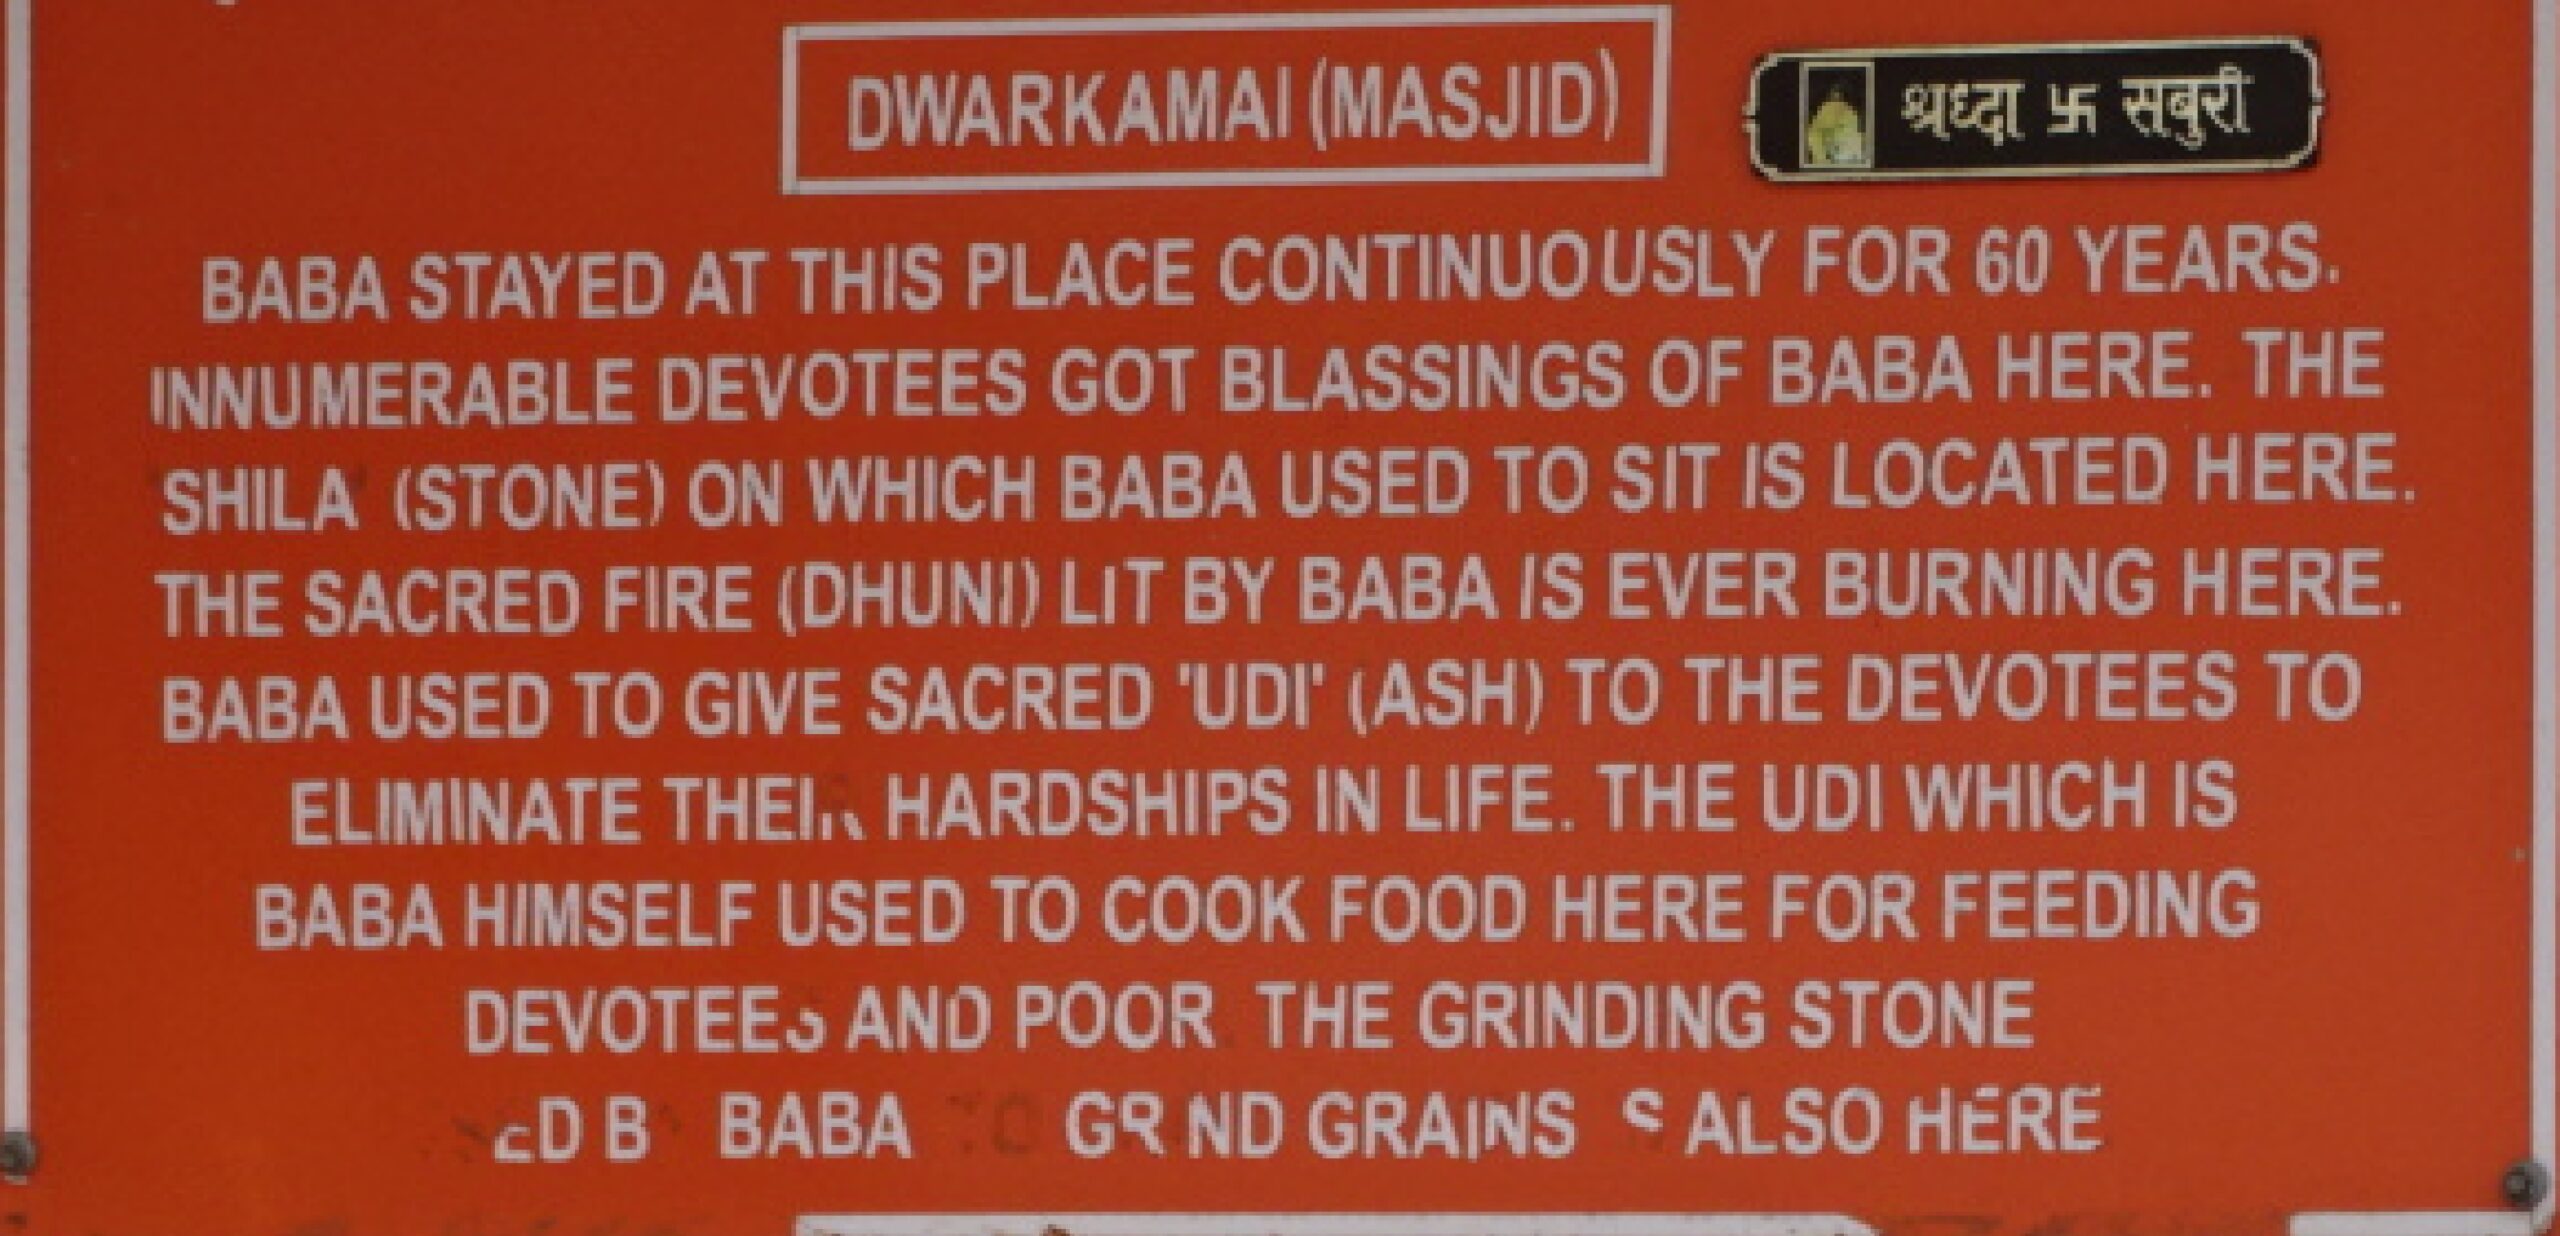 About - Dwarkamai (Masjid) at Shirdi, Maharashtra, India